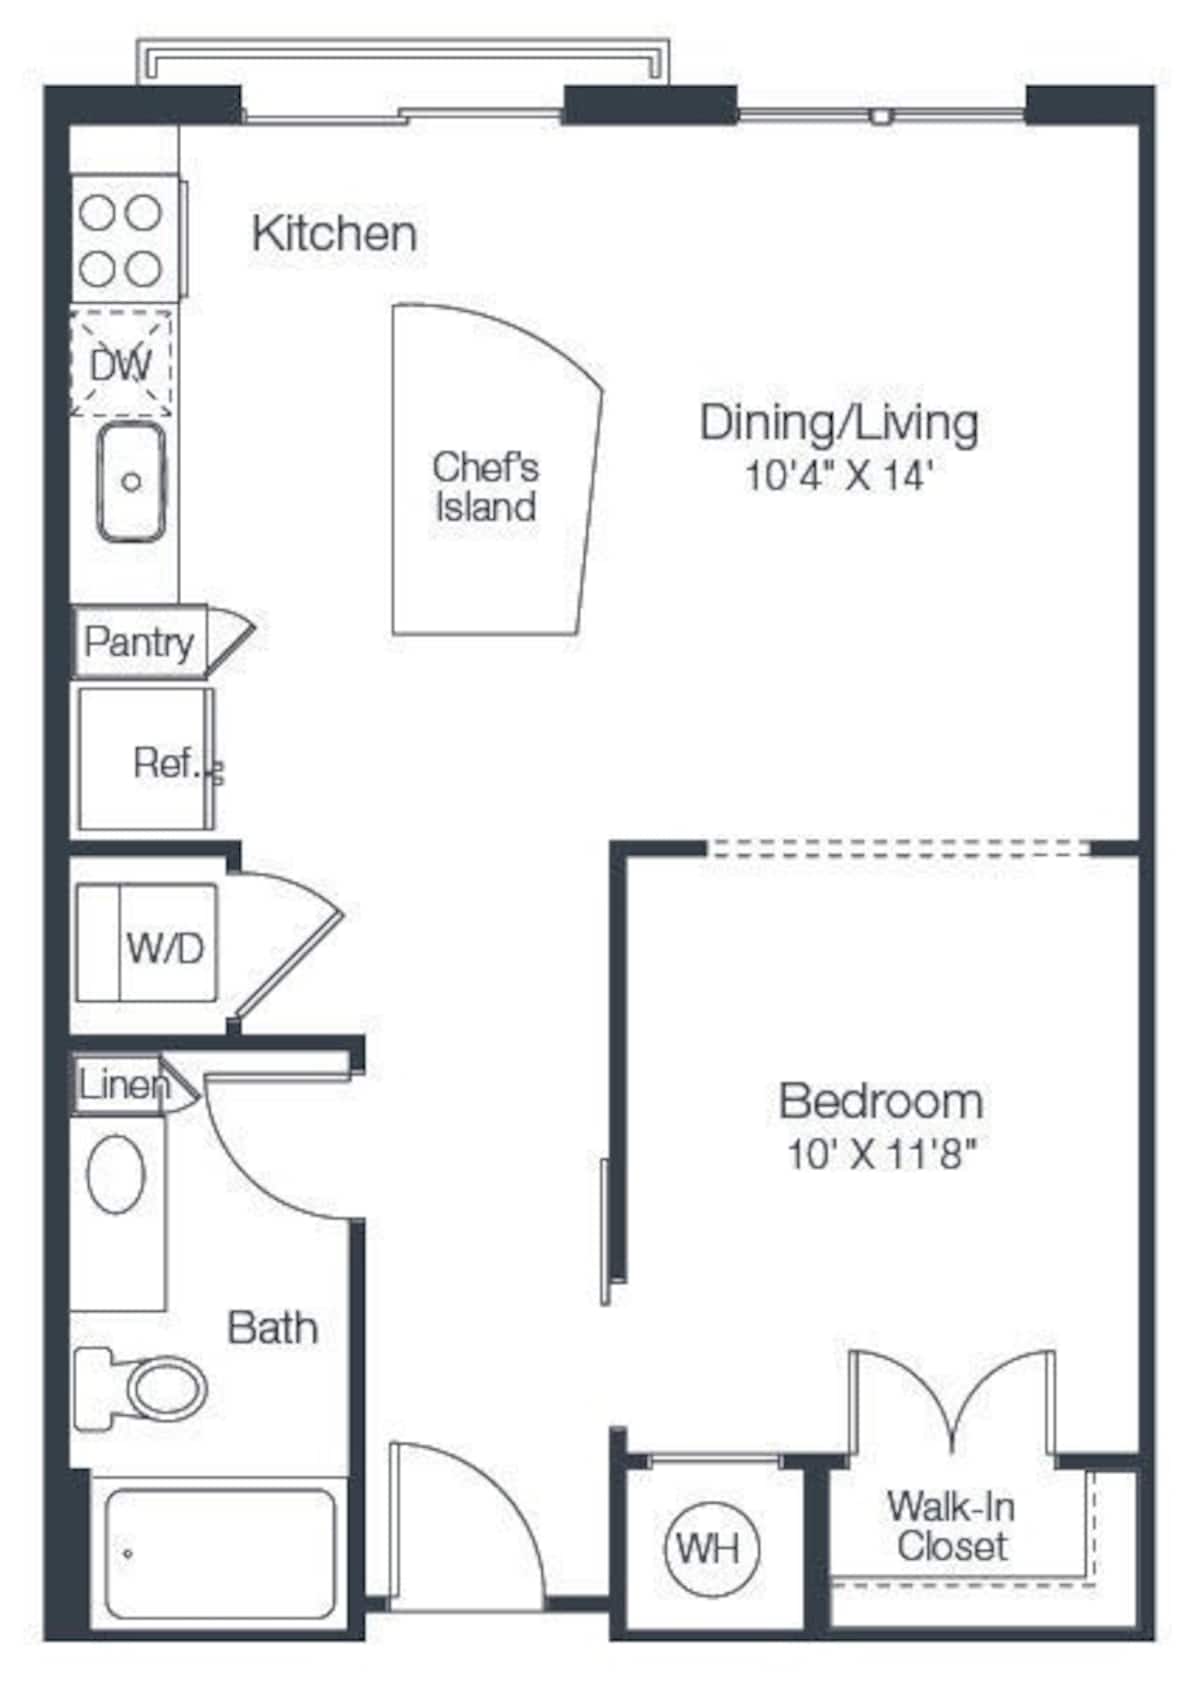 Floorplan diagram for A1b, showing 1 bedroom